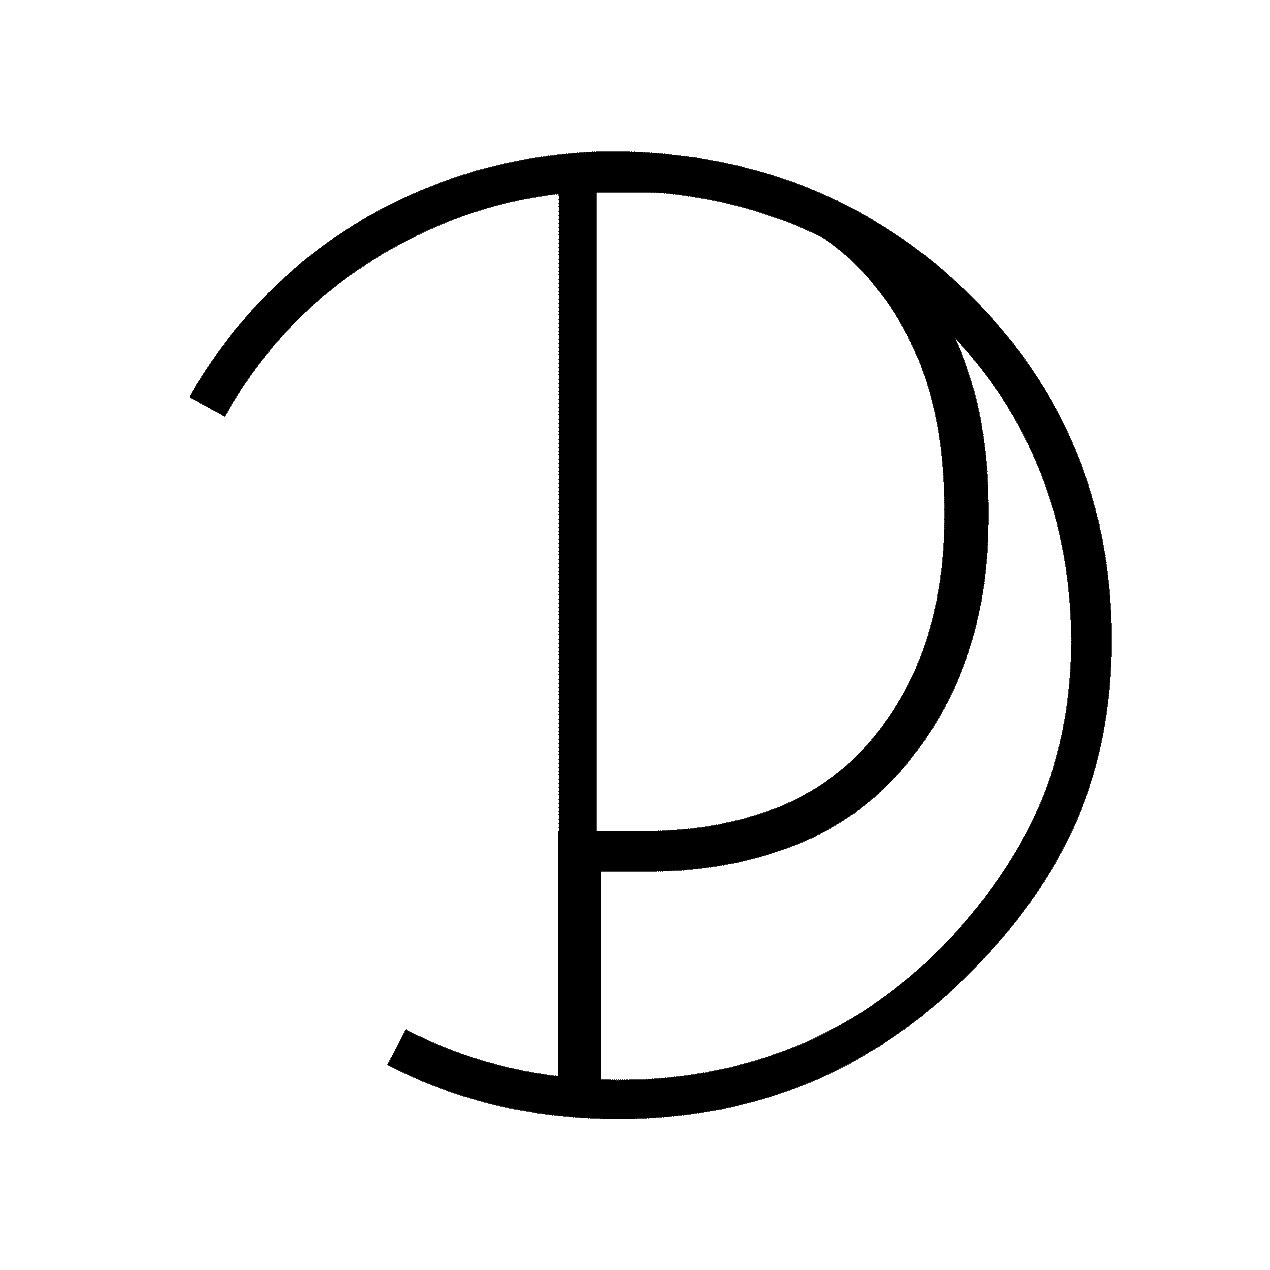 Pitod Logo